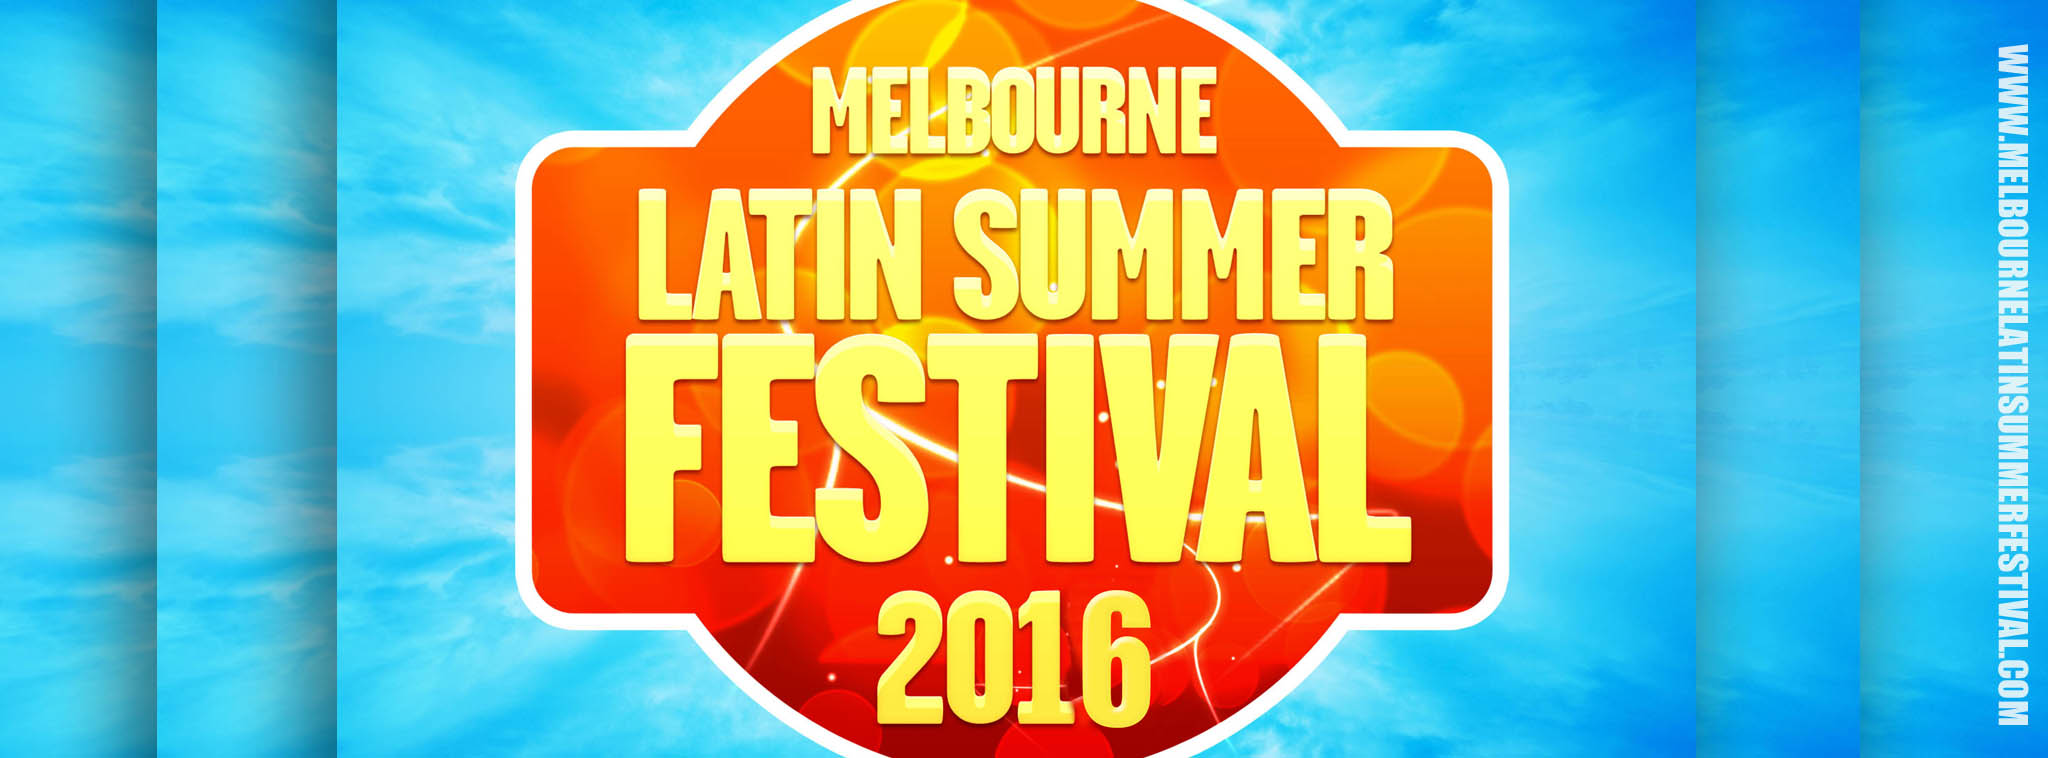 Melbourne Latin Summer Festival 2016